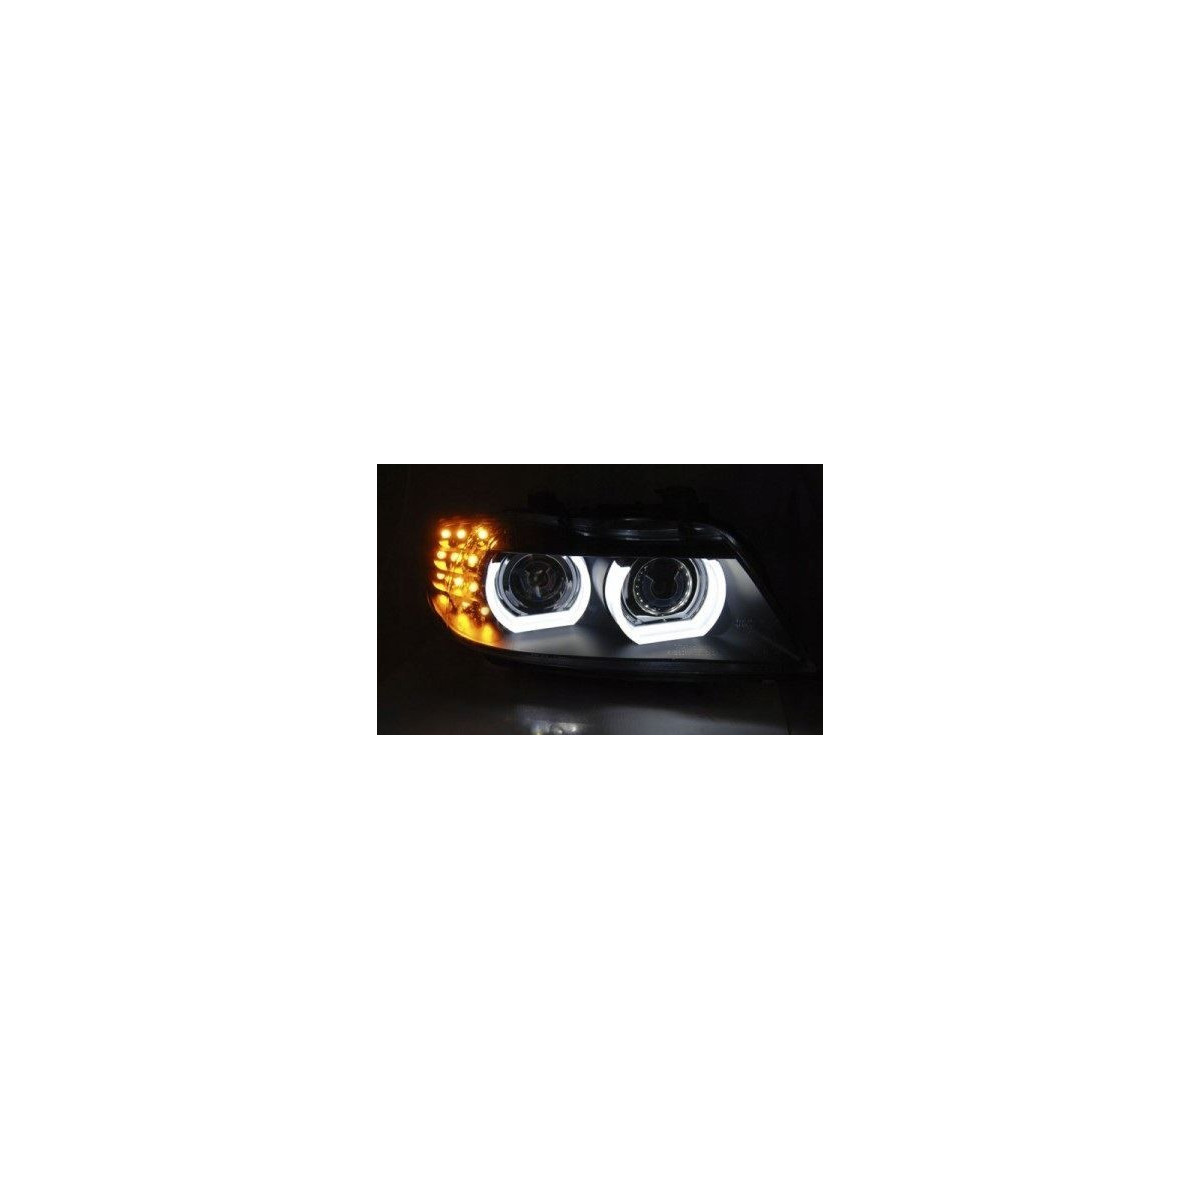 LAMPY BMW E90 E91 09-11 DRL BLACK XENON RINGI 3D